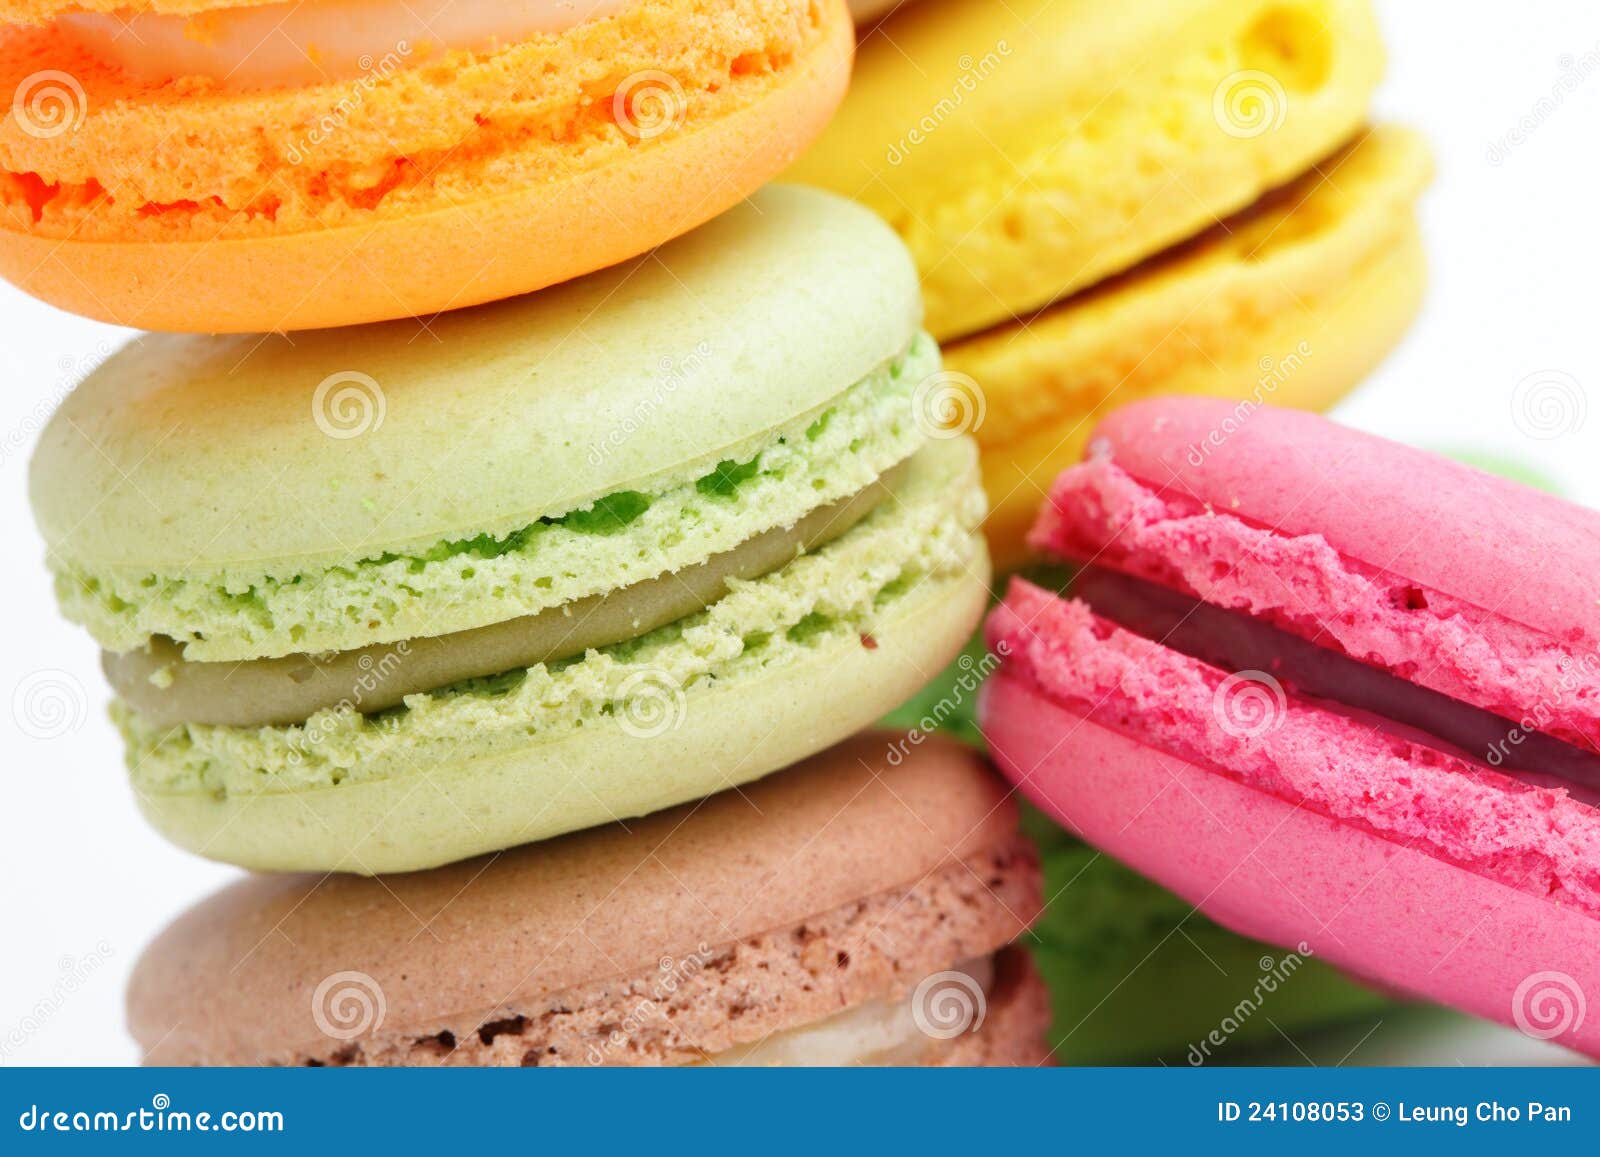 Macaron stock image. Image of chocolate, food, macaroon - 24108053